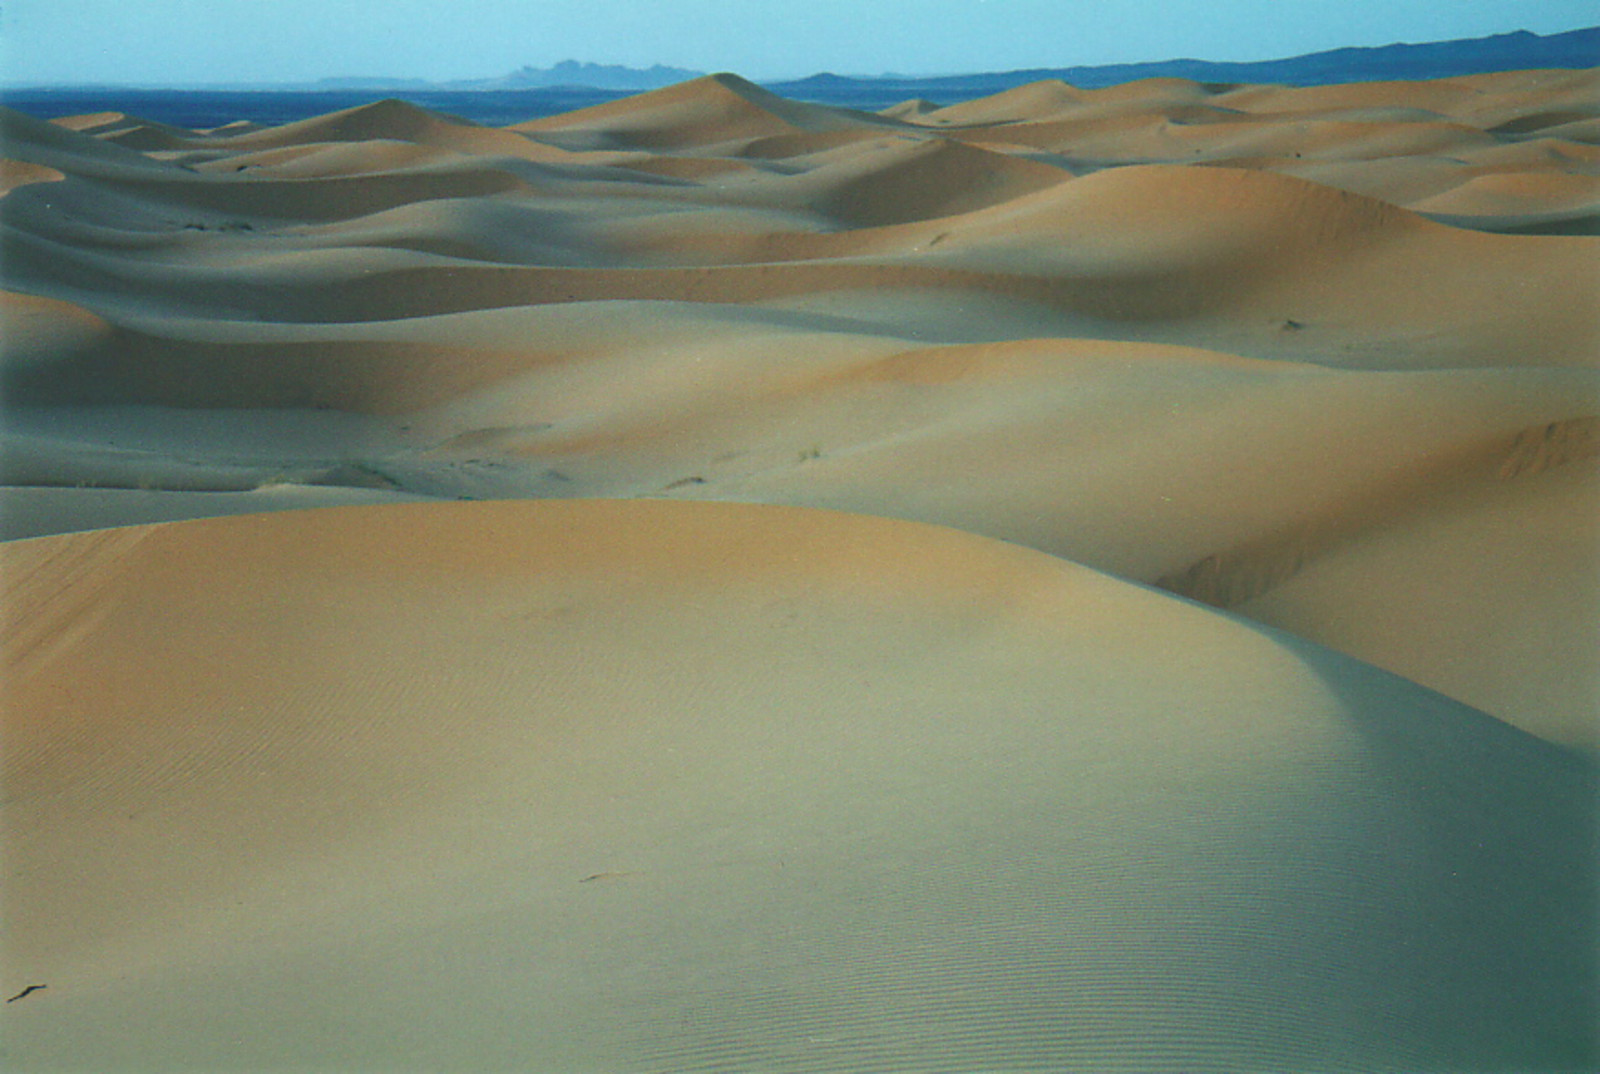 Dunes in the Sahara near Merzouga